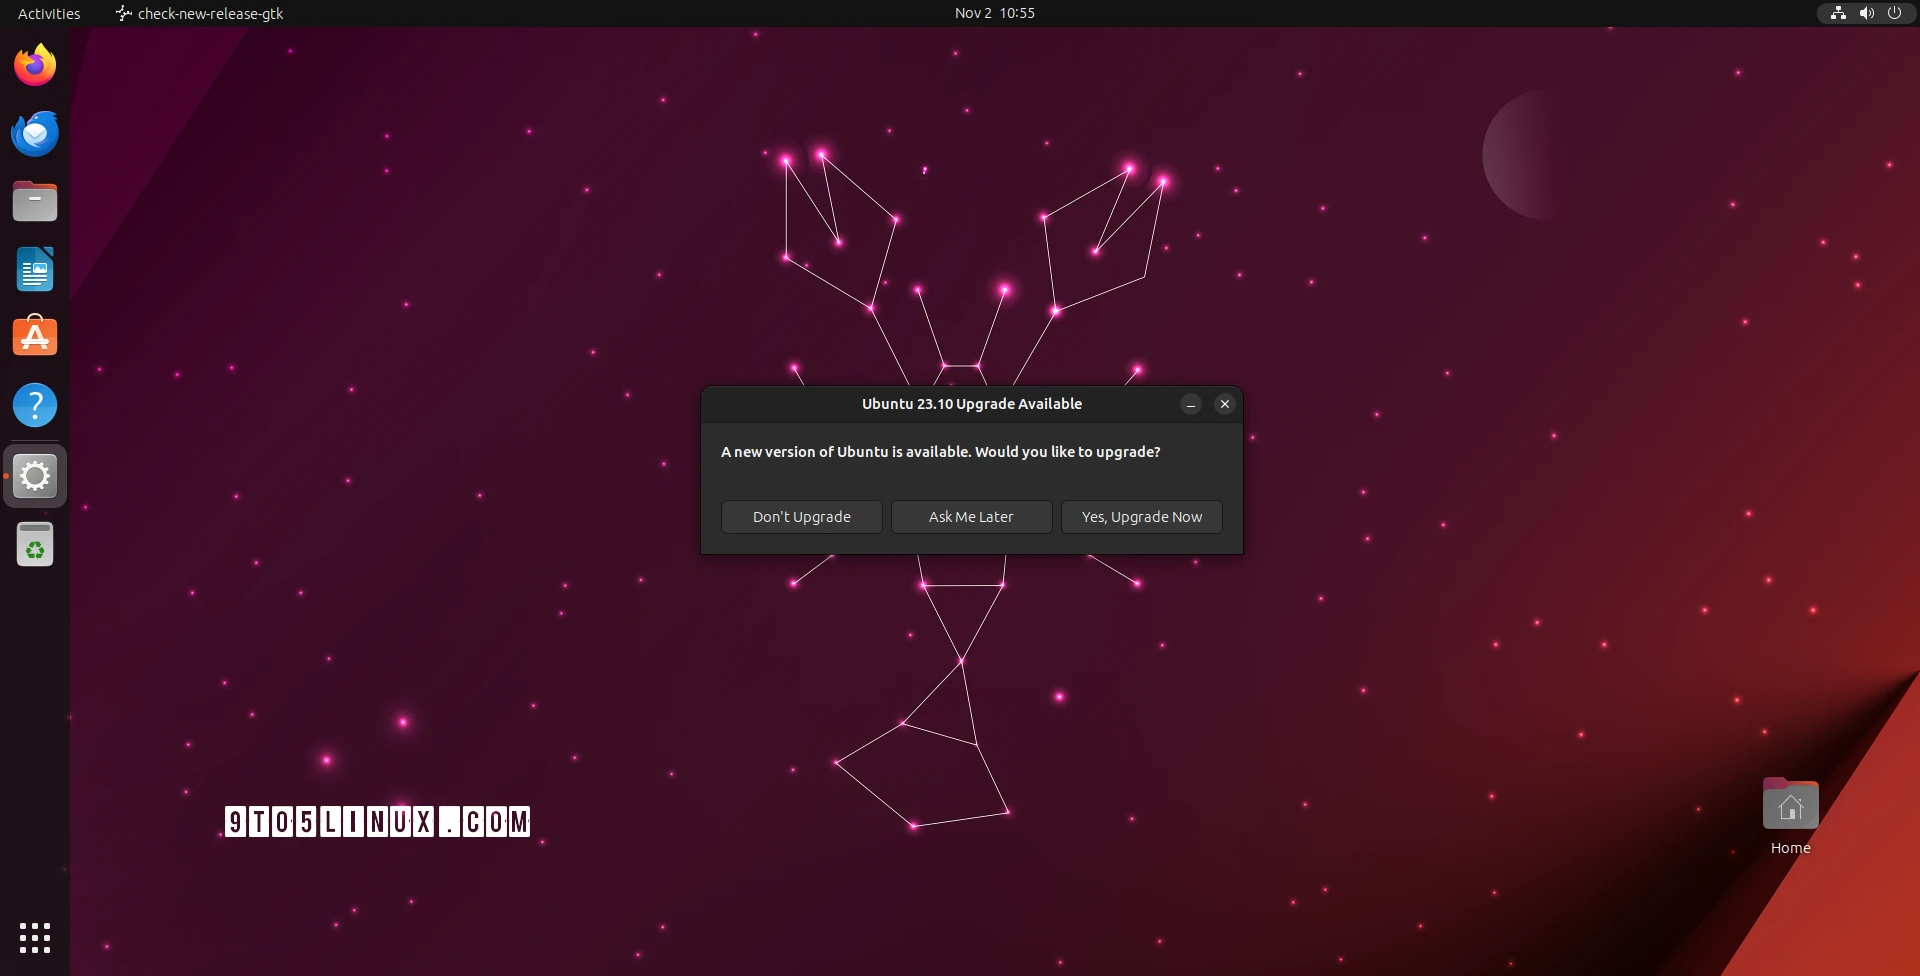 You Can Now Upgrade from Ubuntu 23.04 to Ubuntu 23.10, Here’s How